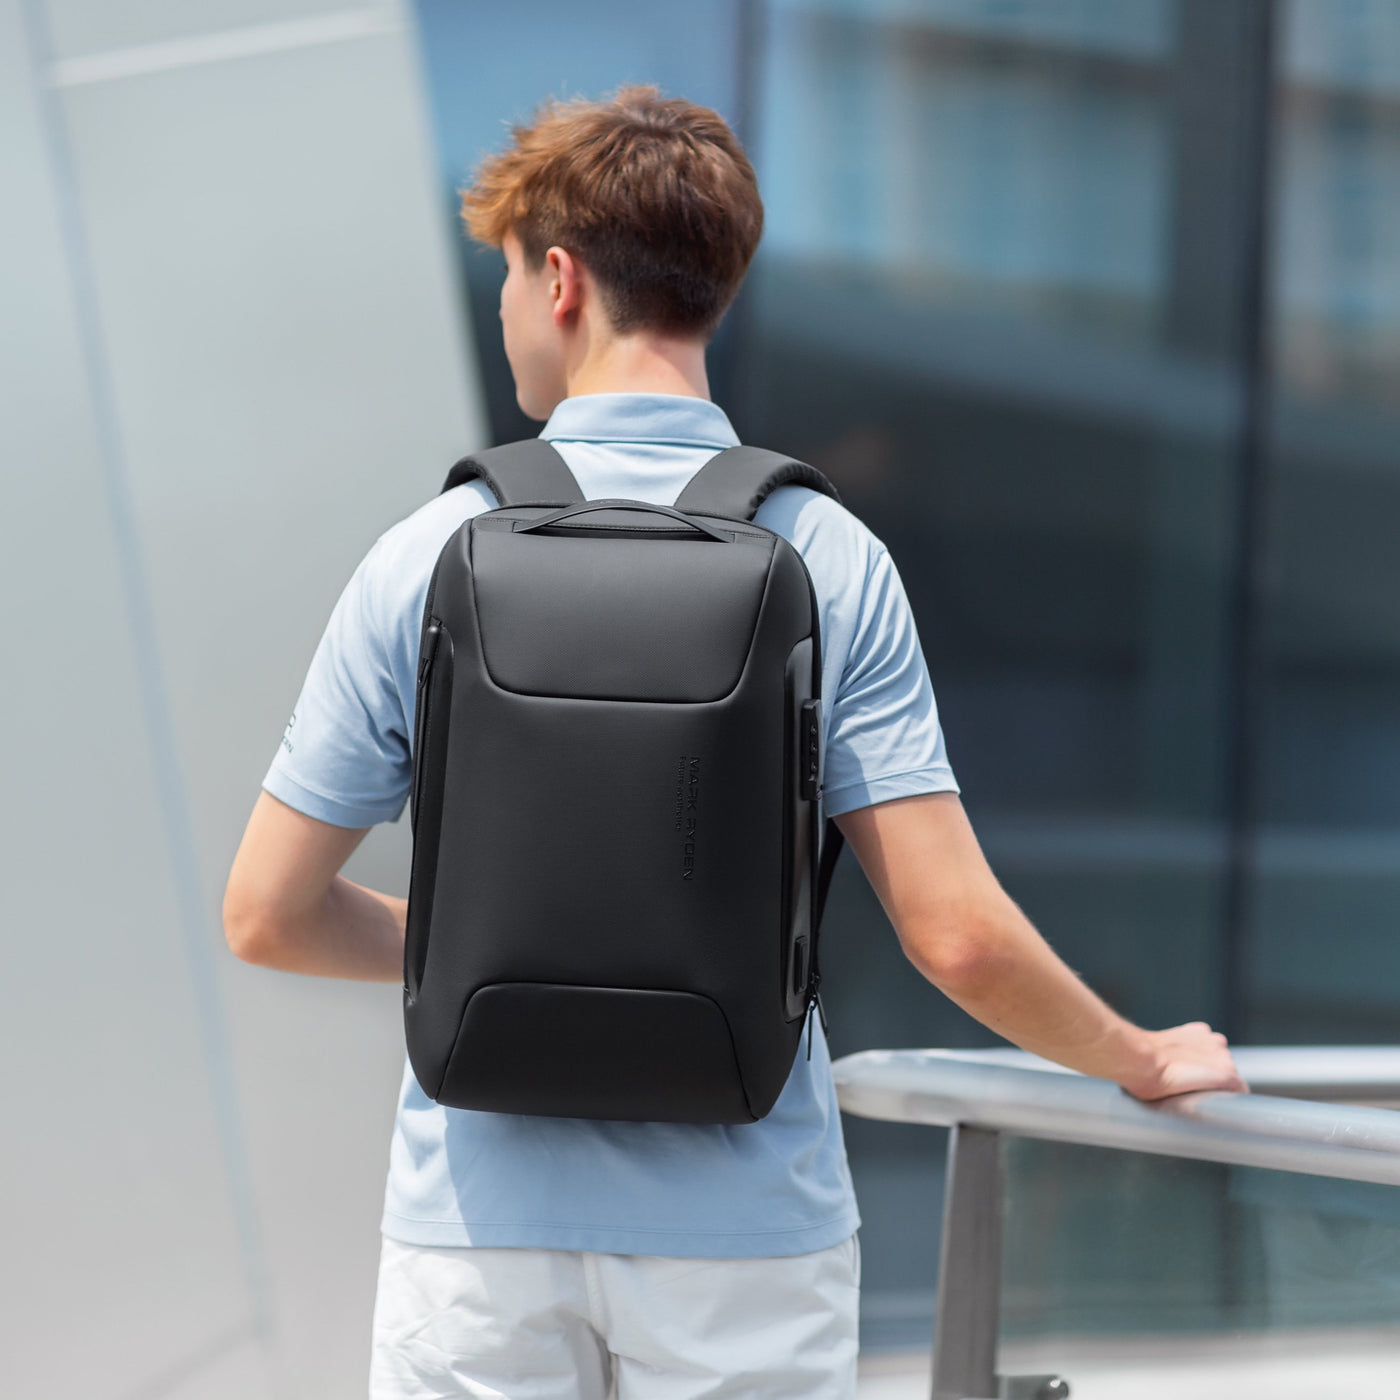 Mark Ryden Canada Odyssey smart laptop backpack with tsa anti theft lock